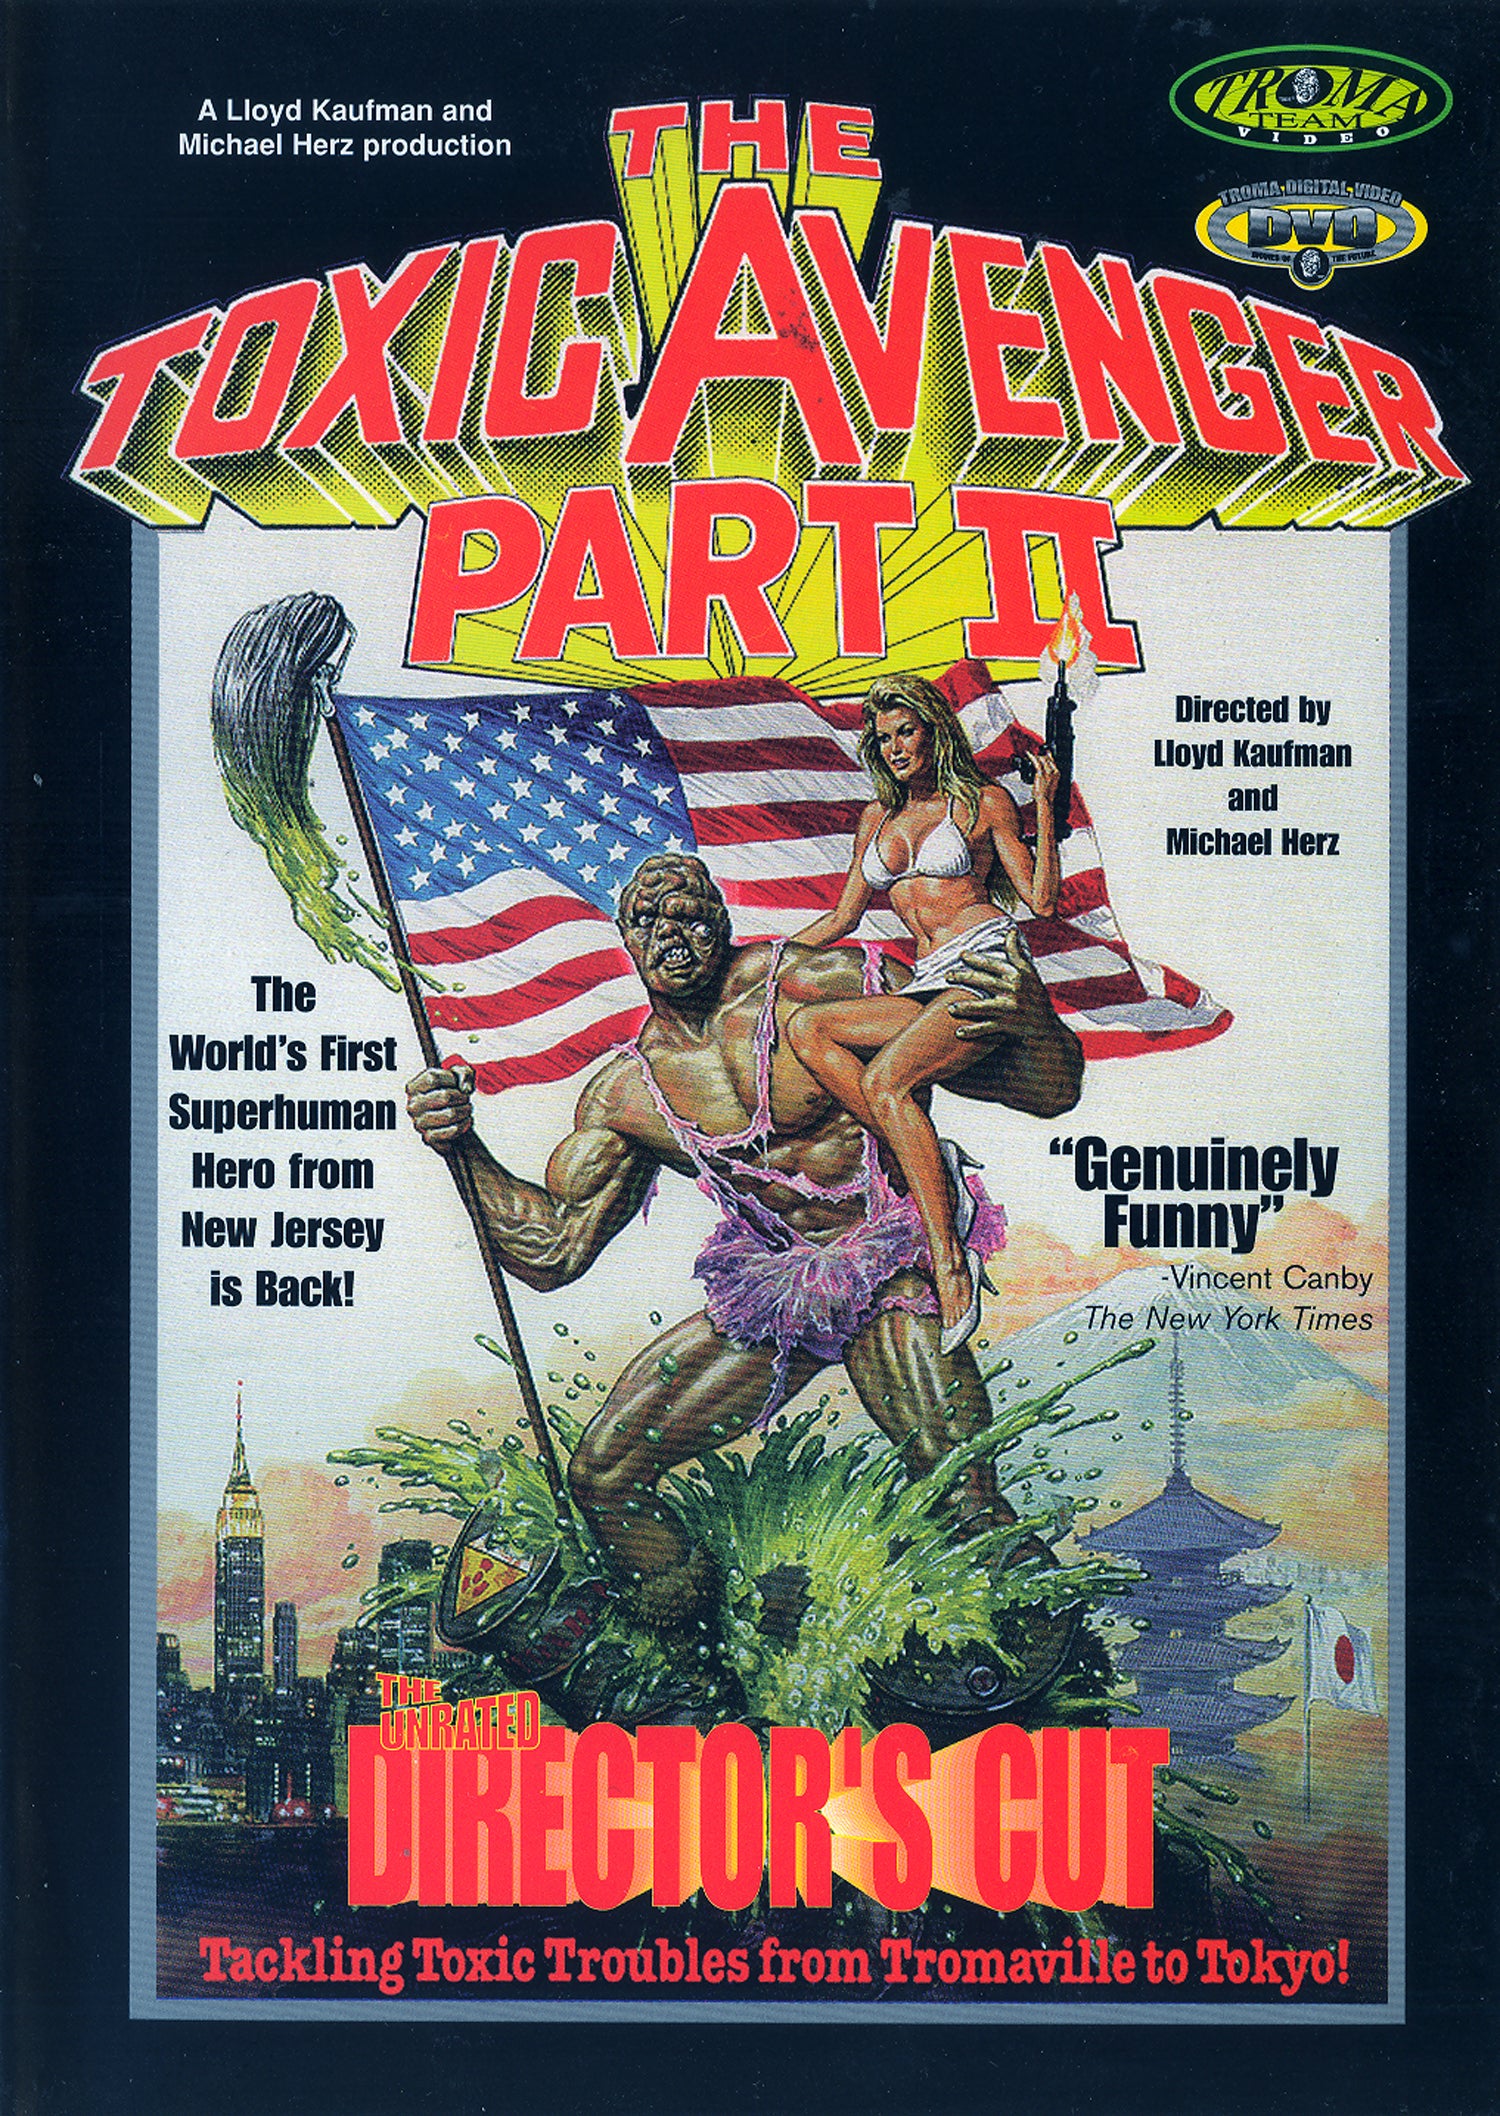 THE TOXIC AVENGER PART II DVD